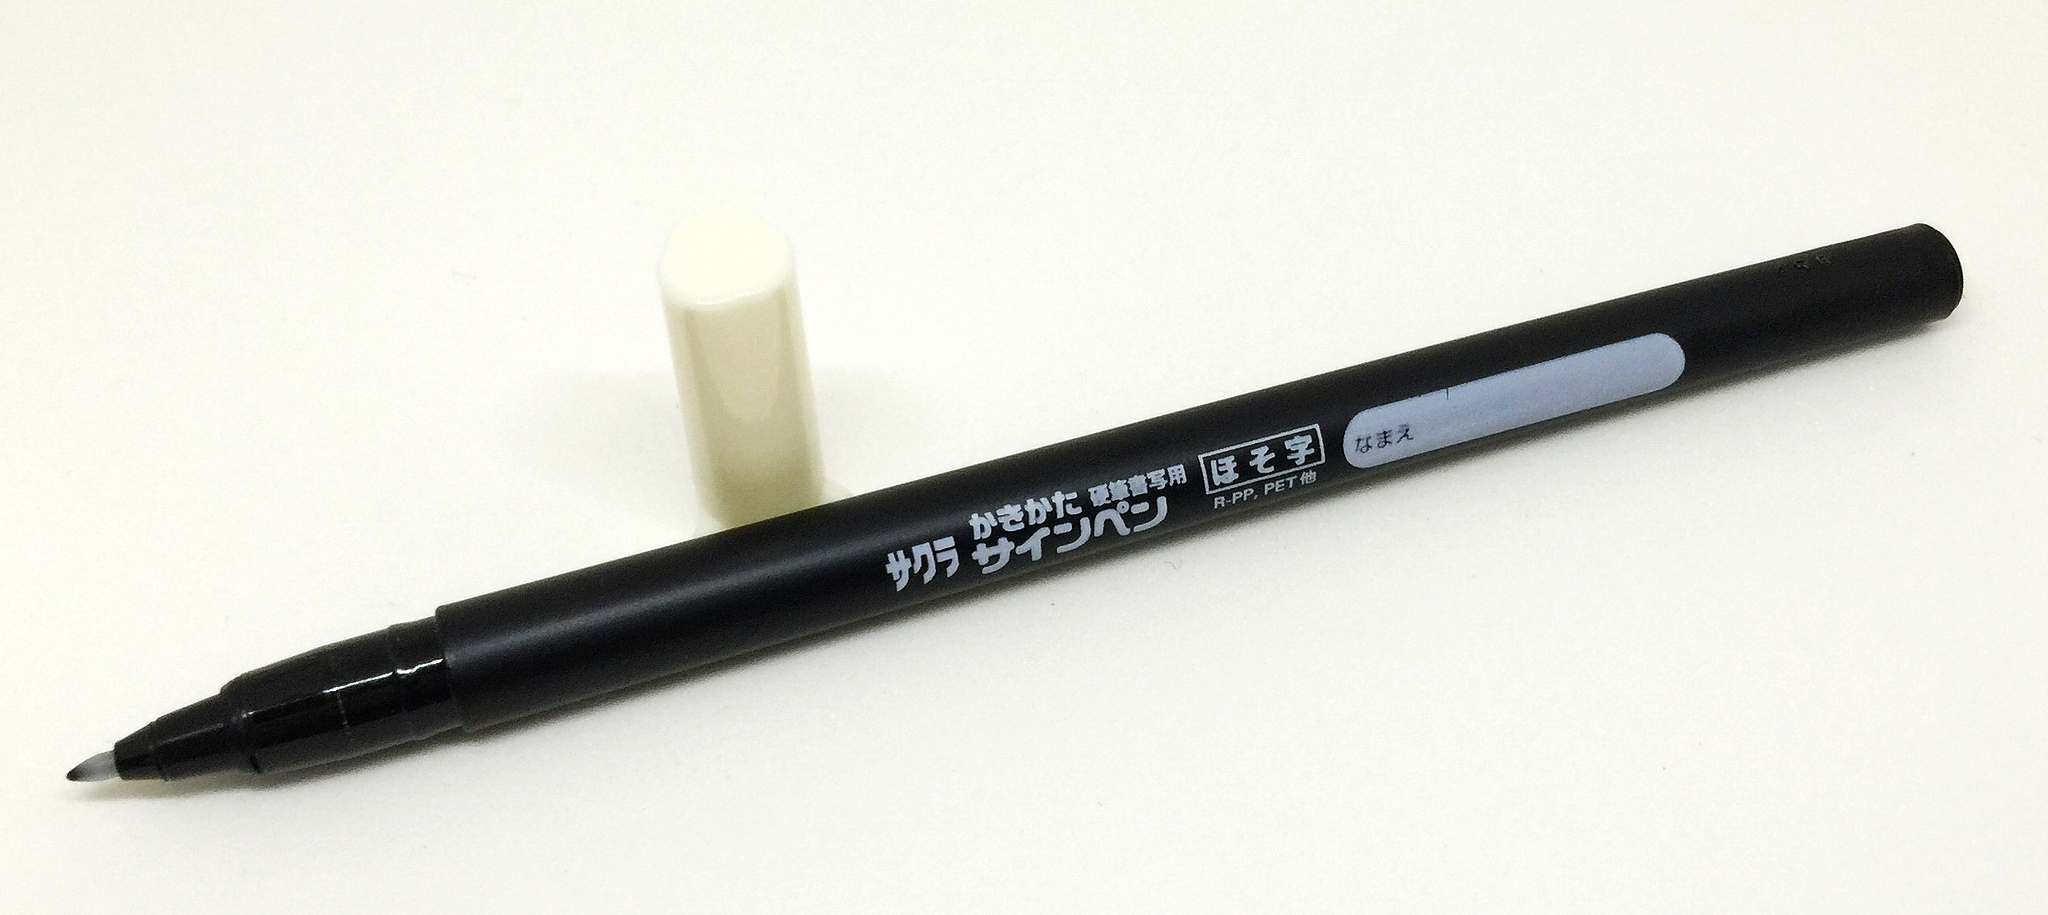 Non-Metallic brush pens : r/Zentangle